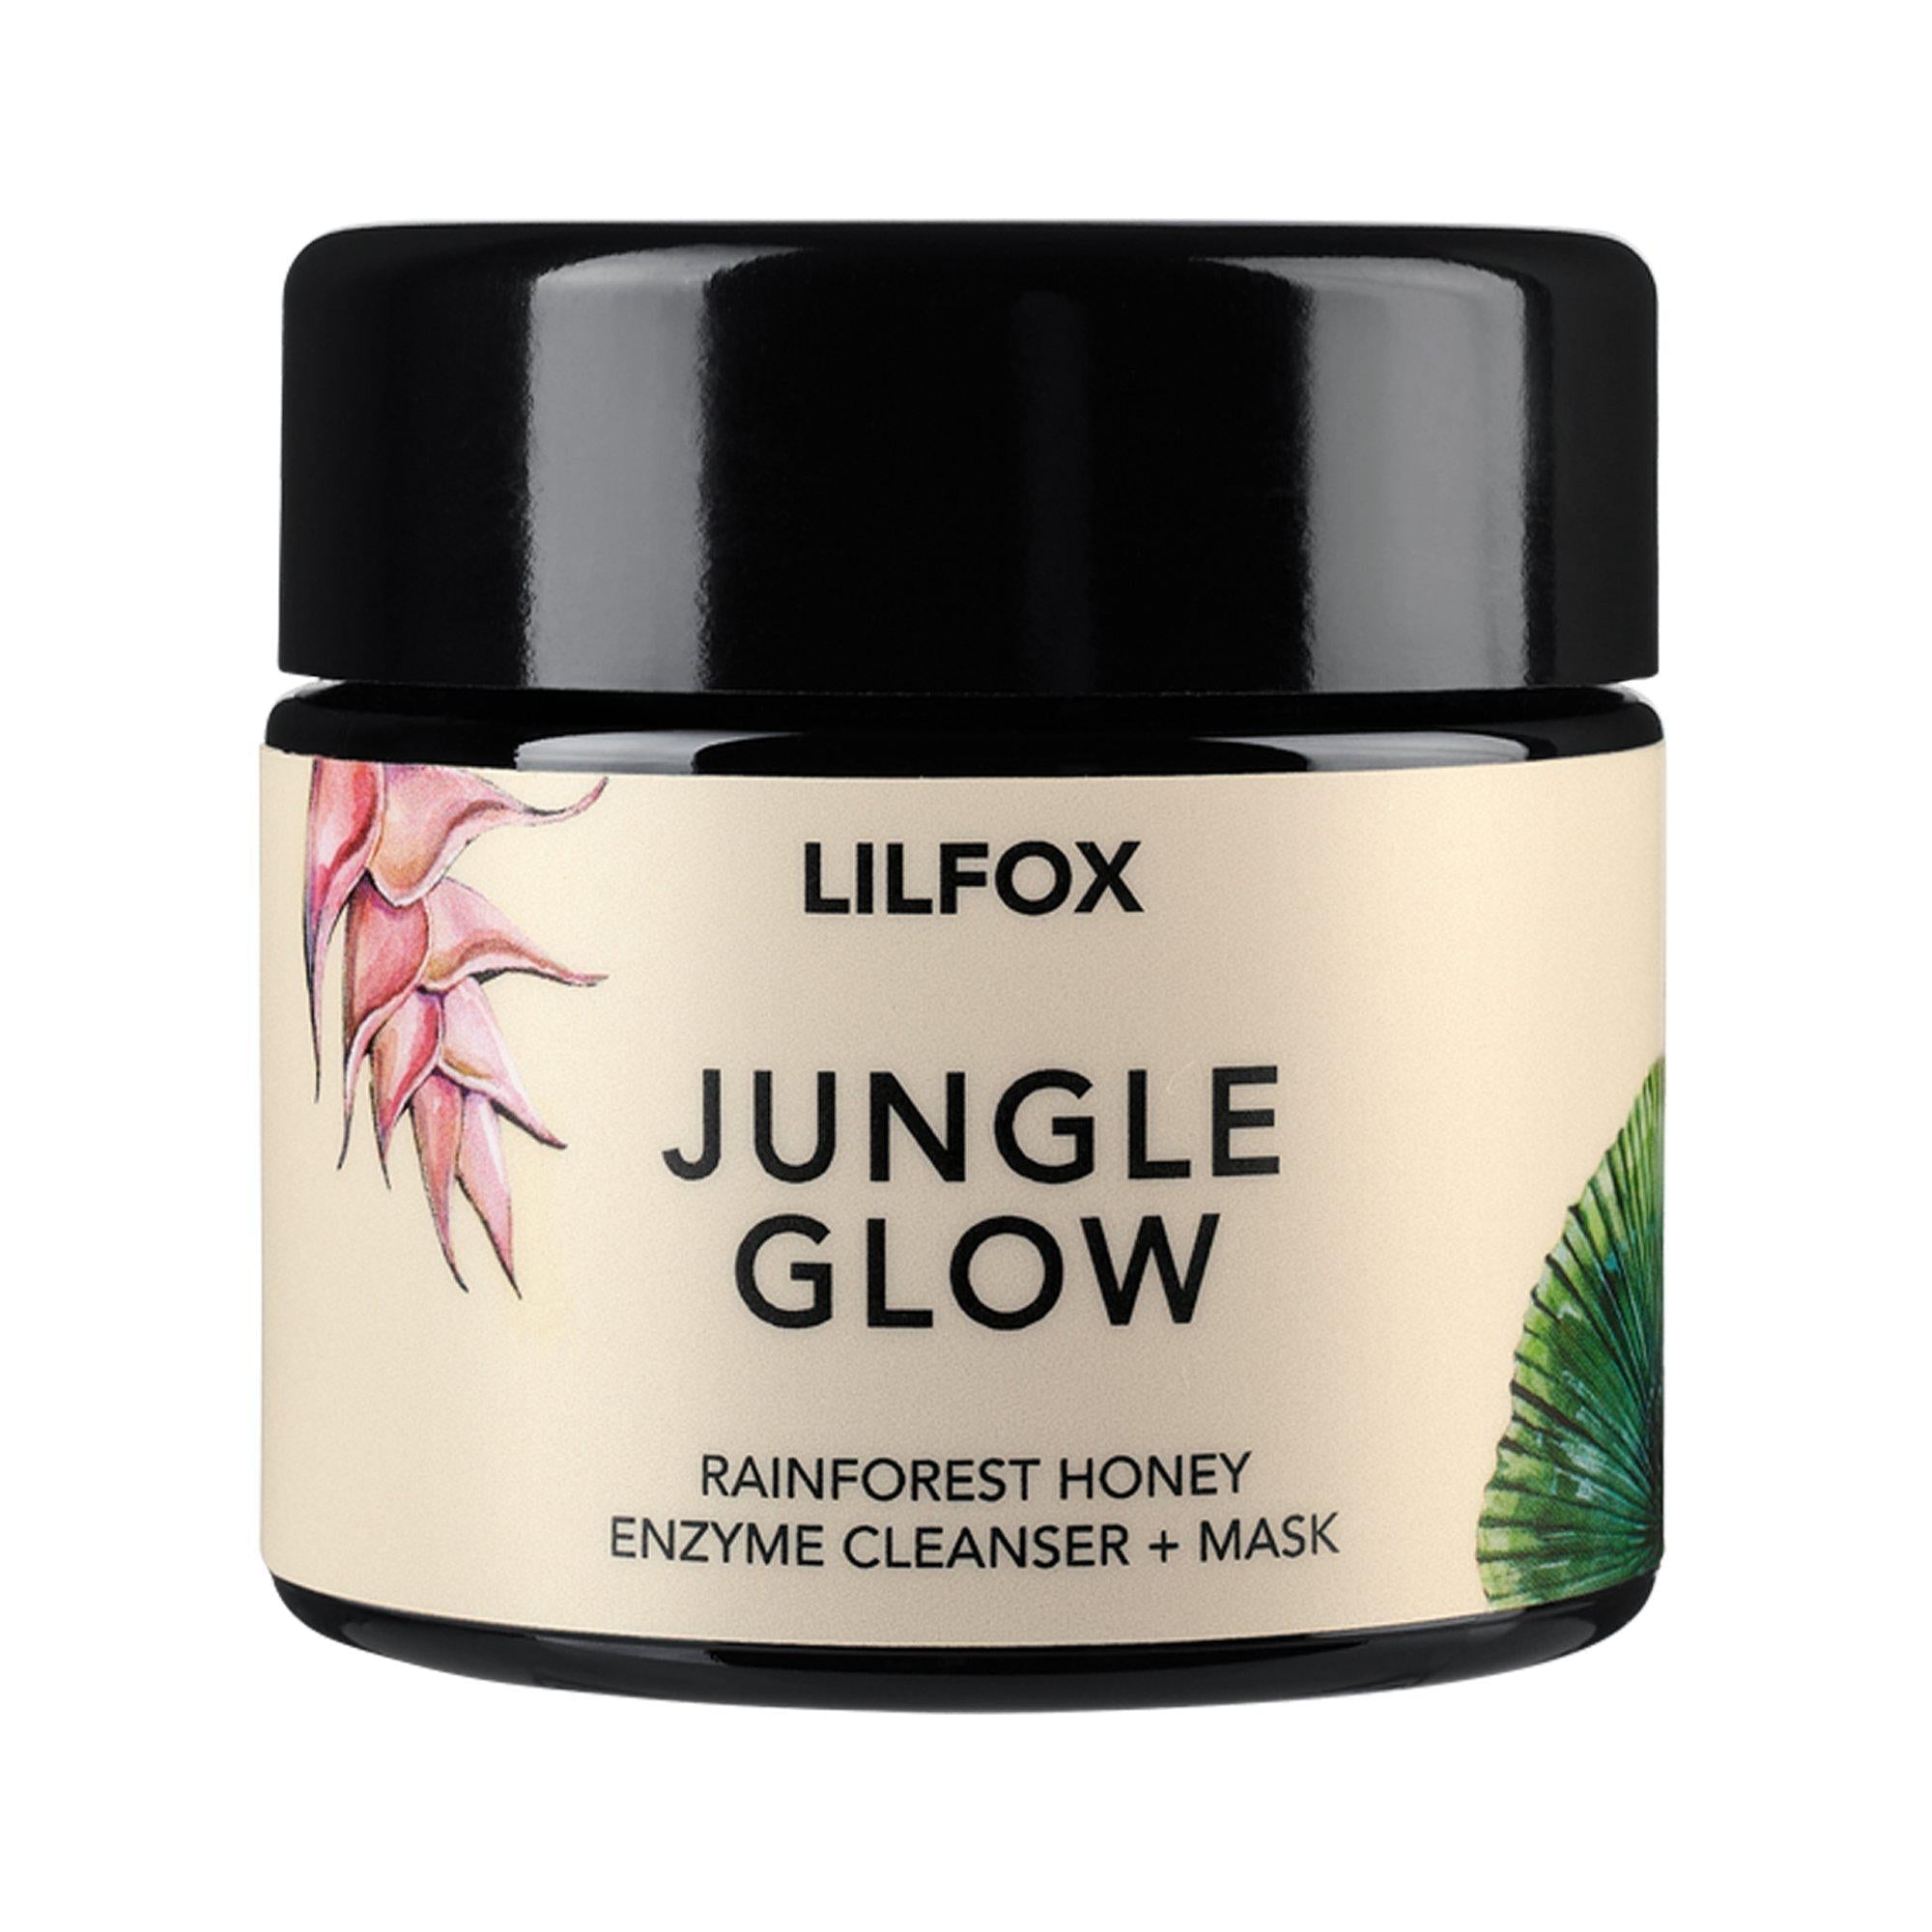 Indisponible - Jungle Glow Masque Enzymatique Unavailable - Jungle Glow Enzymatic Mask - Lilfox